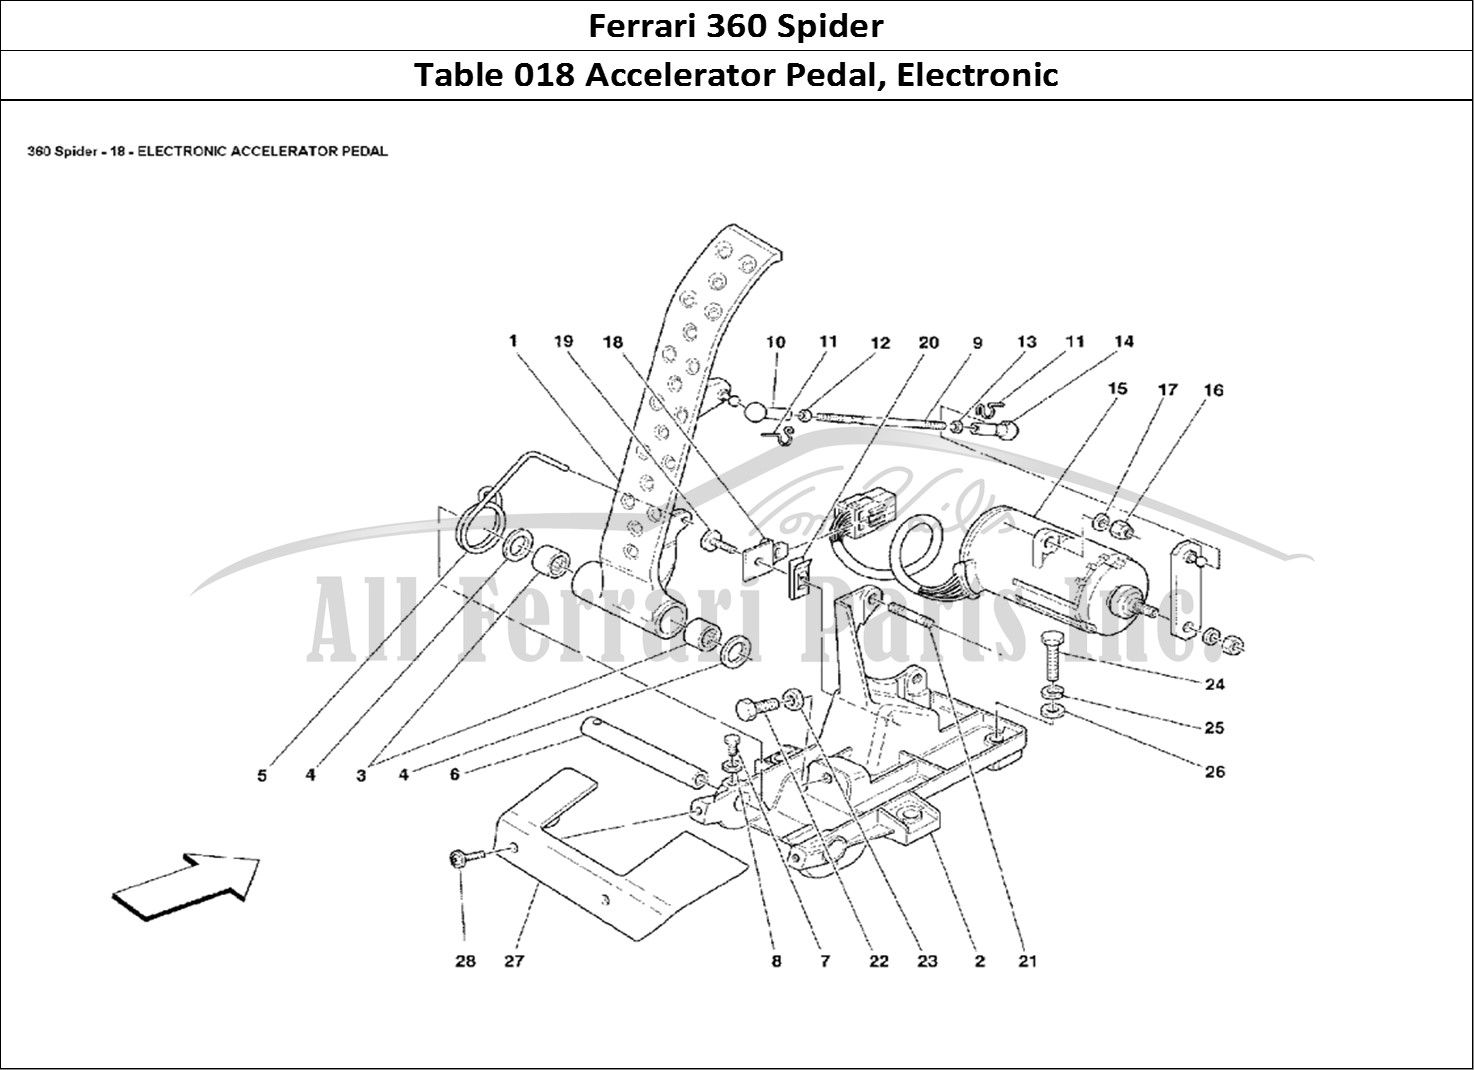 Ferrari Parts Ferrari 360 Spider Page 018 Electronic Accelerator Pe